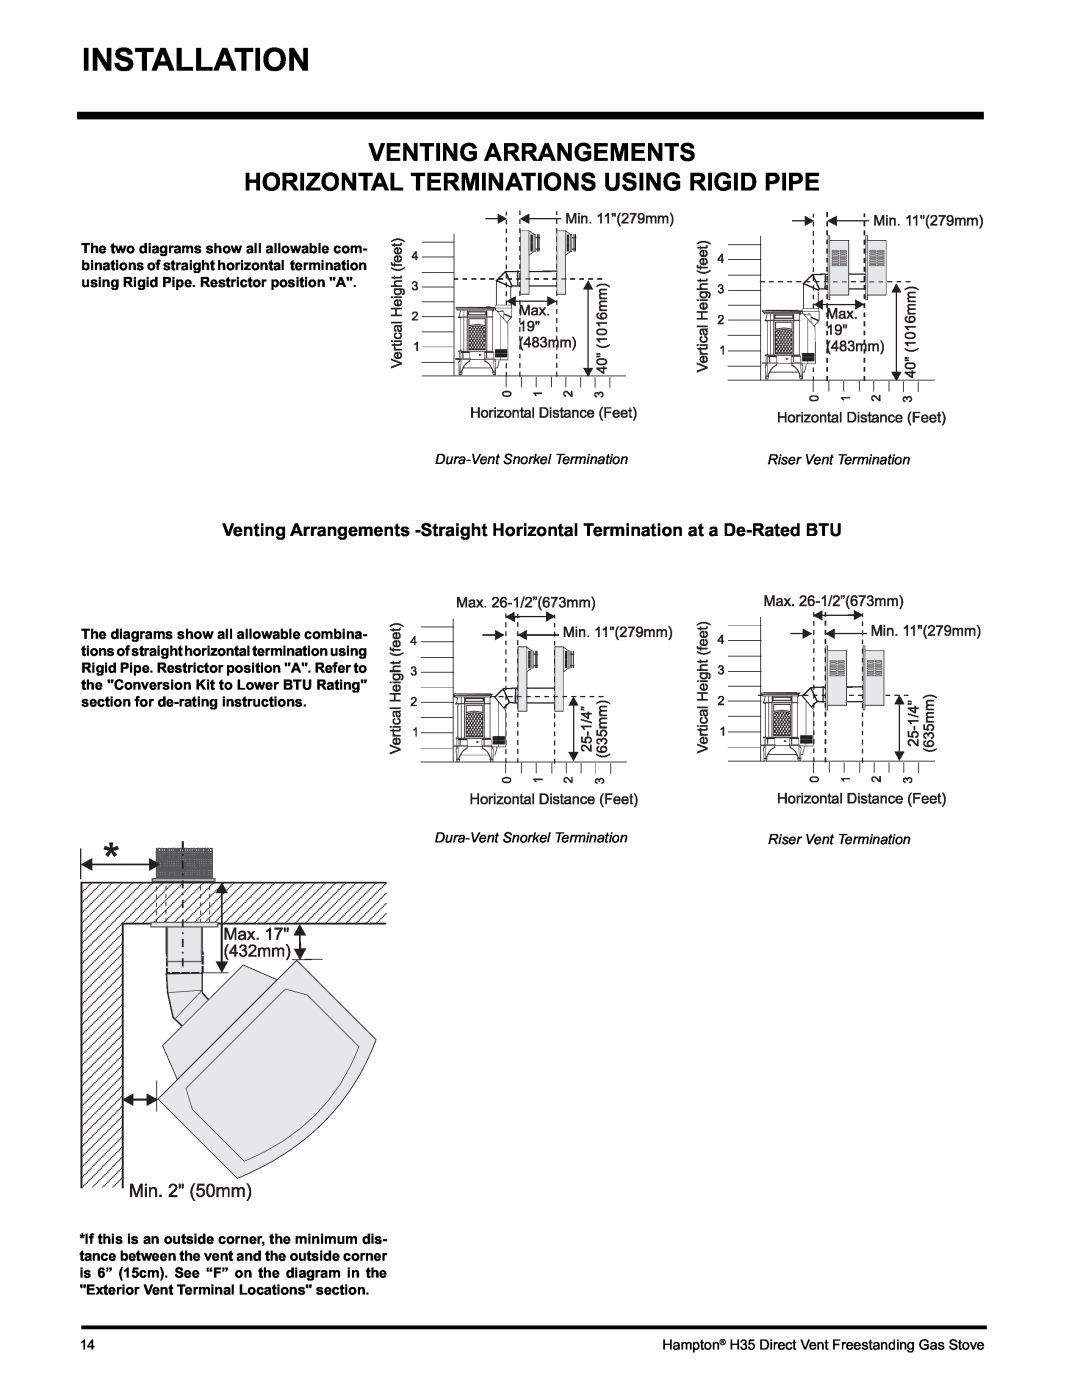 Hampton Direct H35-NG1, H35-LP1 Installation, Venting Arrangements, Horizontal Terminations Using Rigid Pipe 